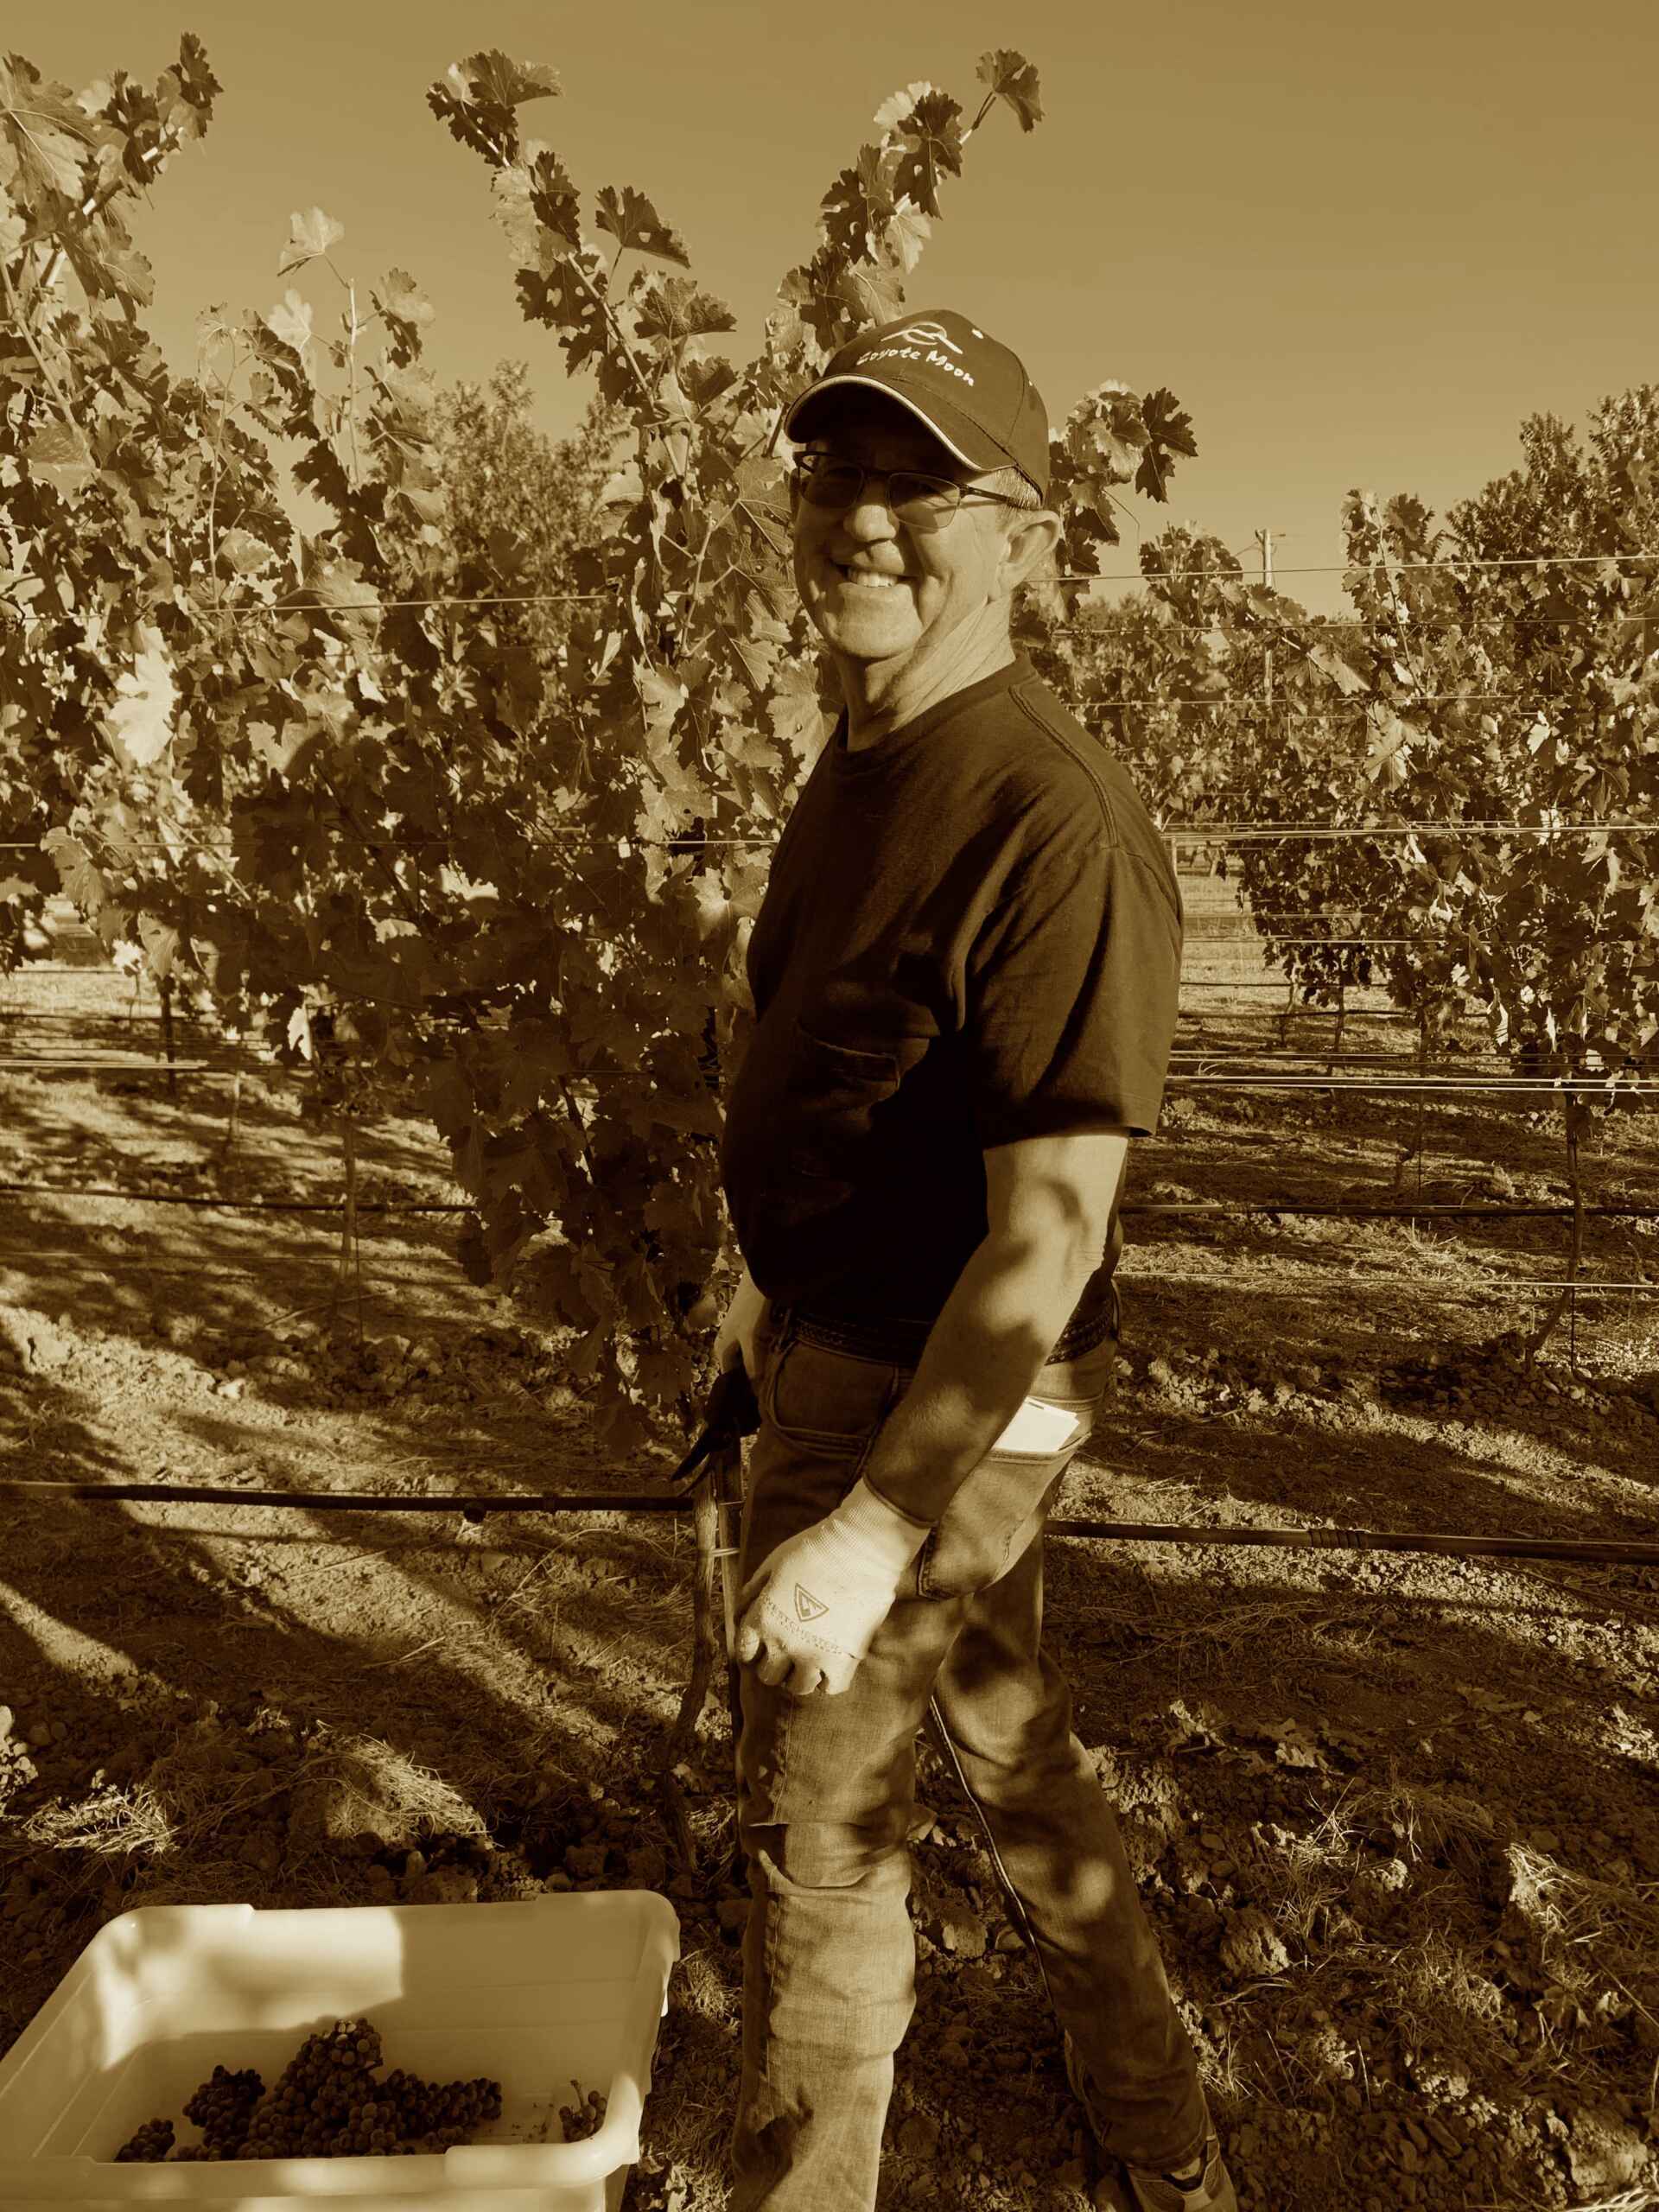 Drew in the vineyard